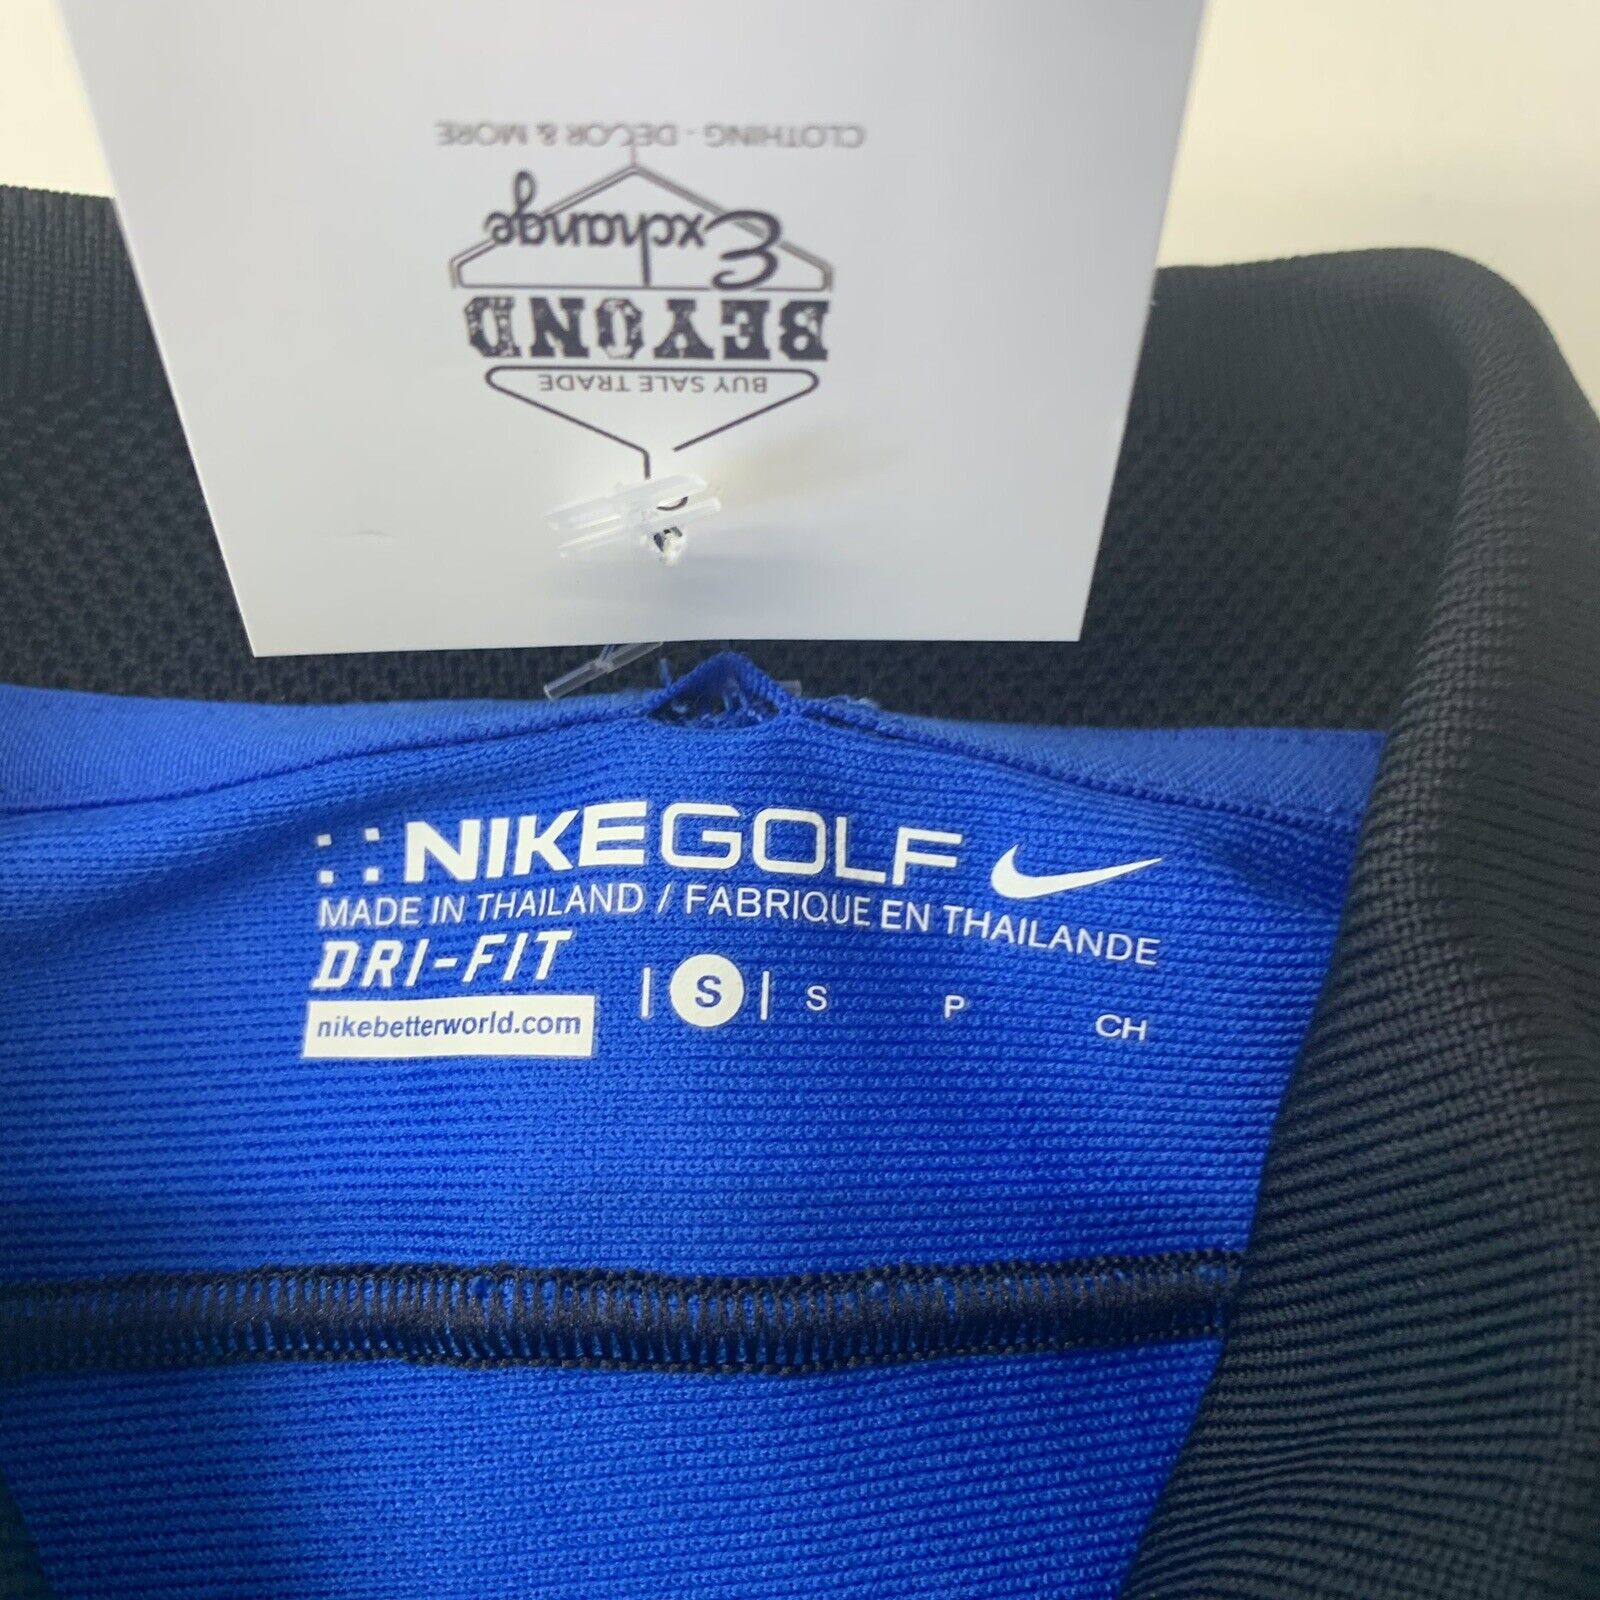 Nike Golf Mens Blue Kansas City Royals Polo Short Sleeve Size Small -  beyond exchange